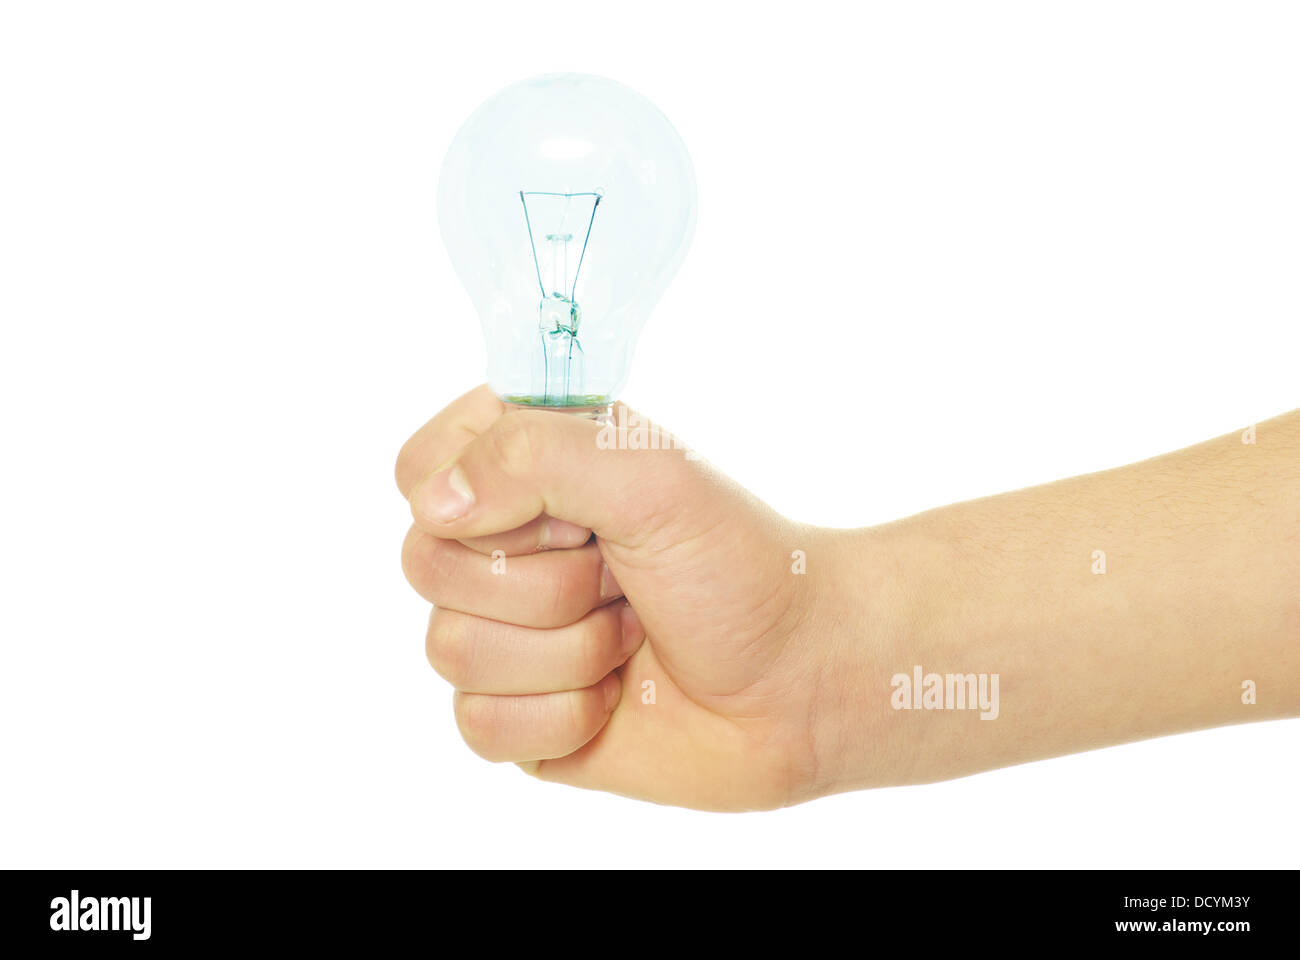 hand holding bulb Stock Photo